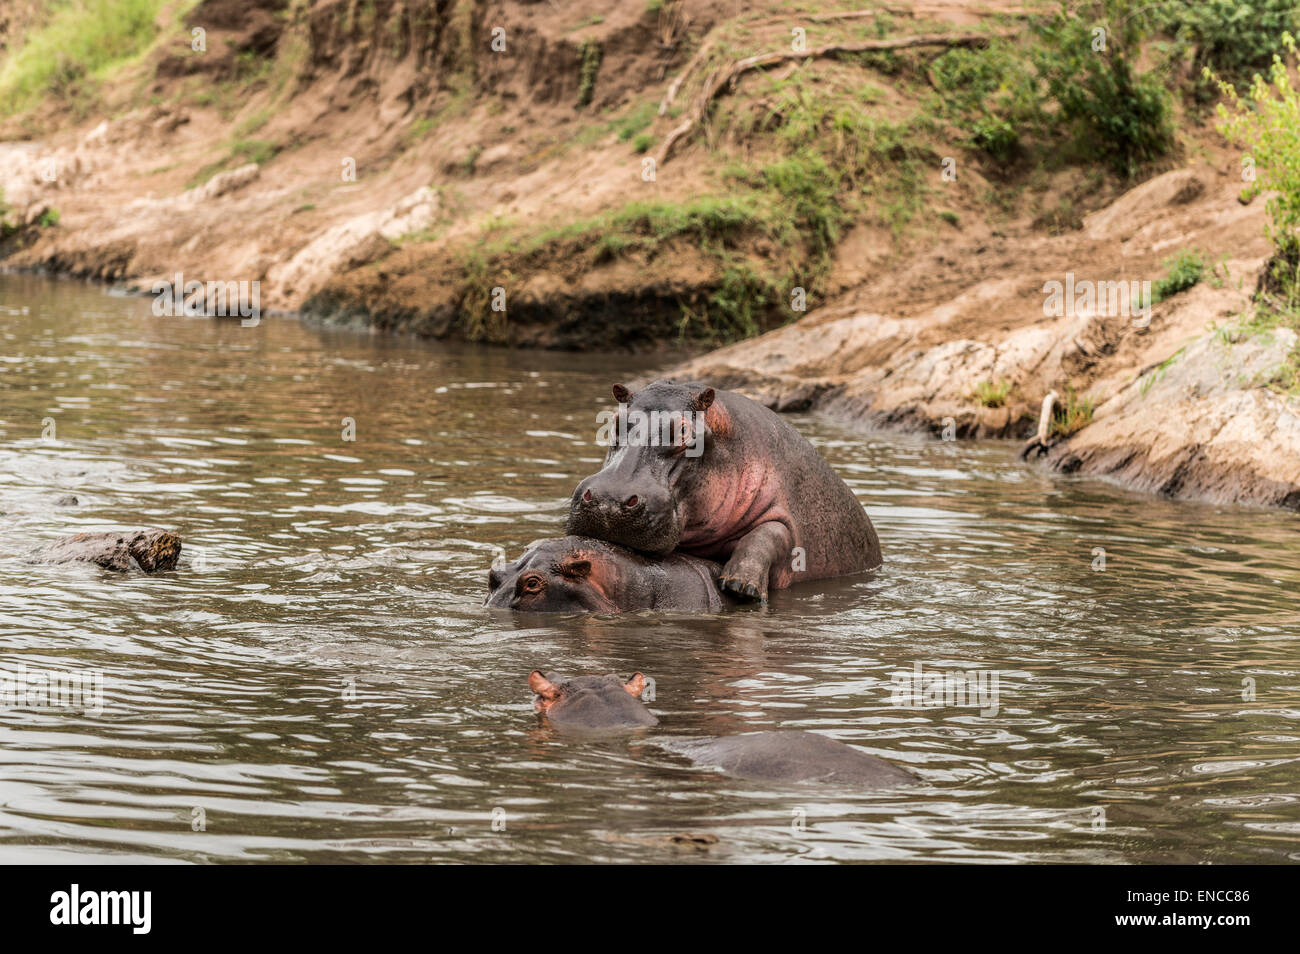 L'accouplement des hippopotames dans la rivière, Serengeti, Tanzania, Africa Banque D'Images